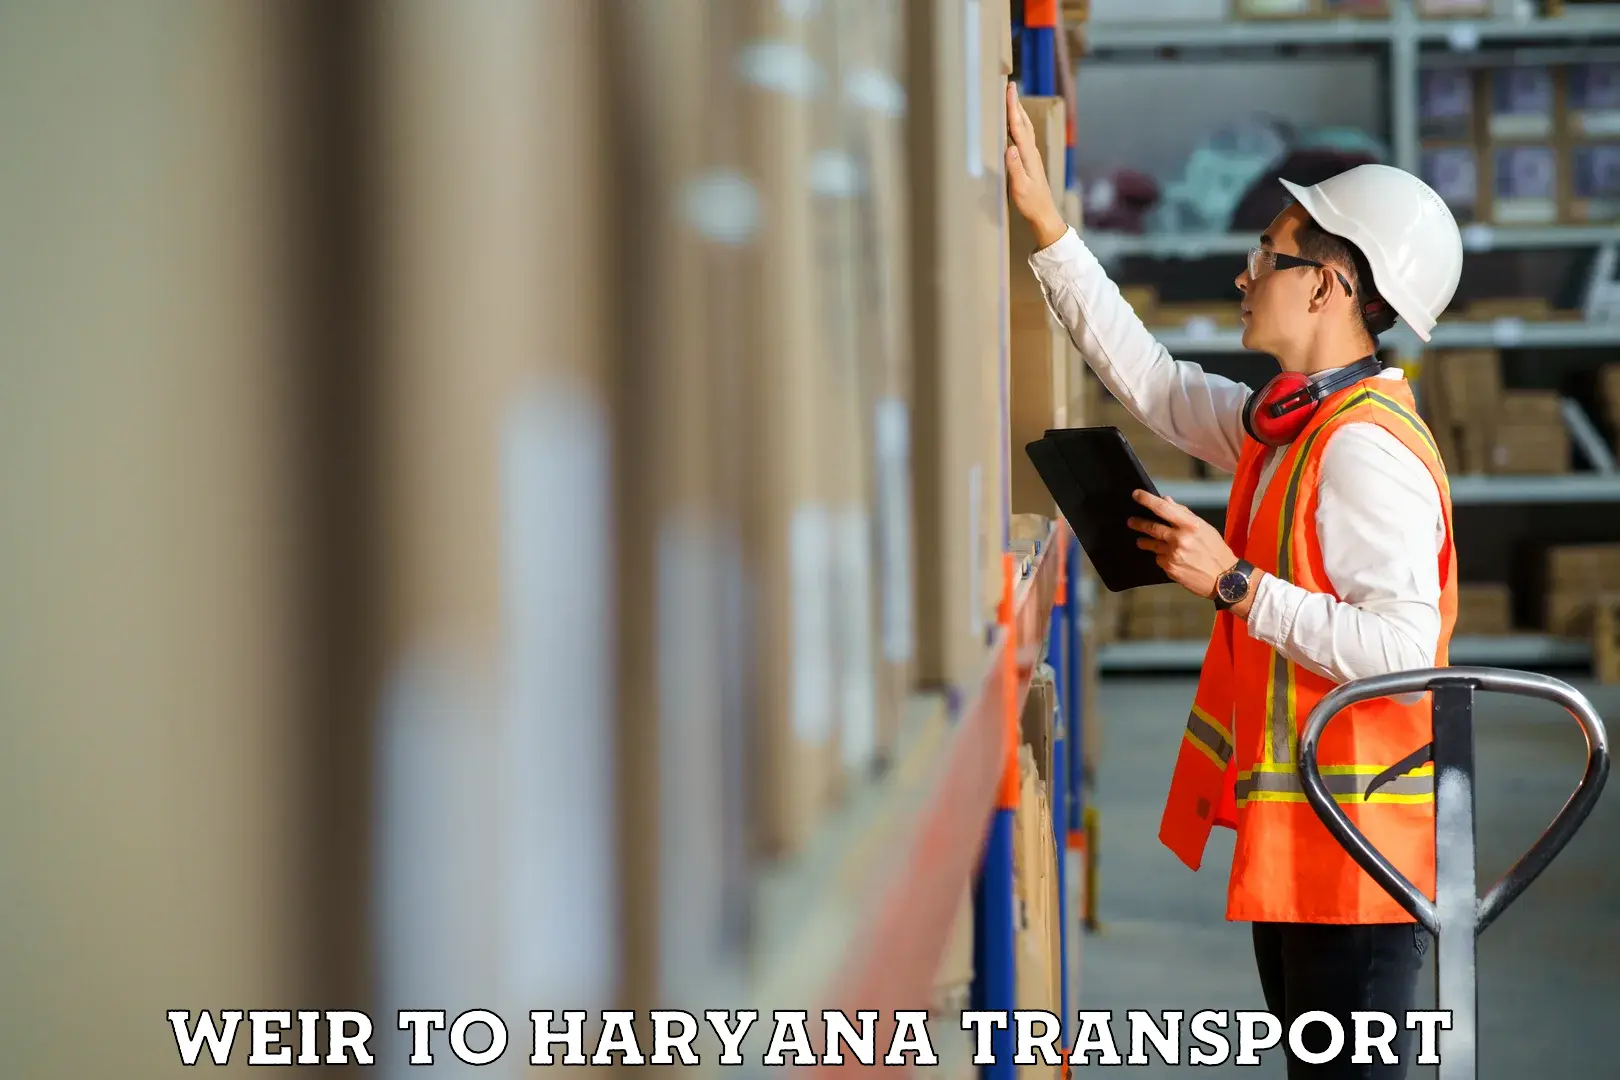 Furniture transport service Weir to Haryana